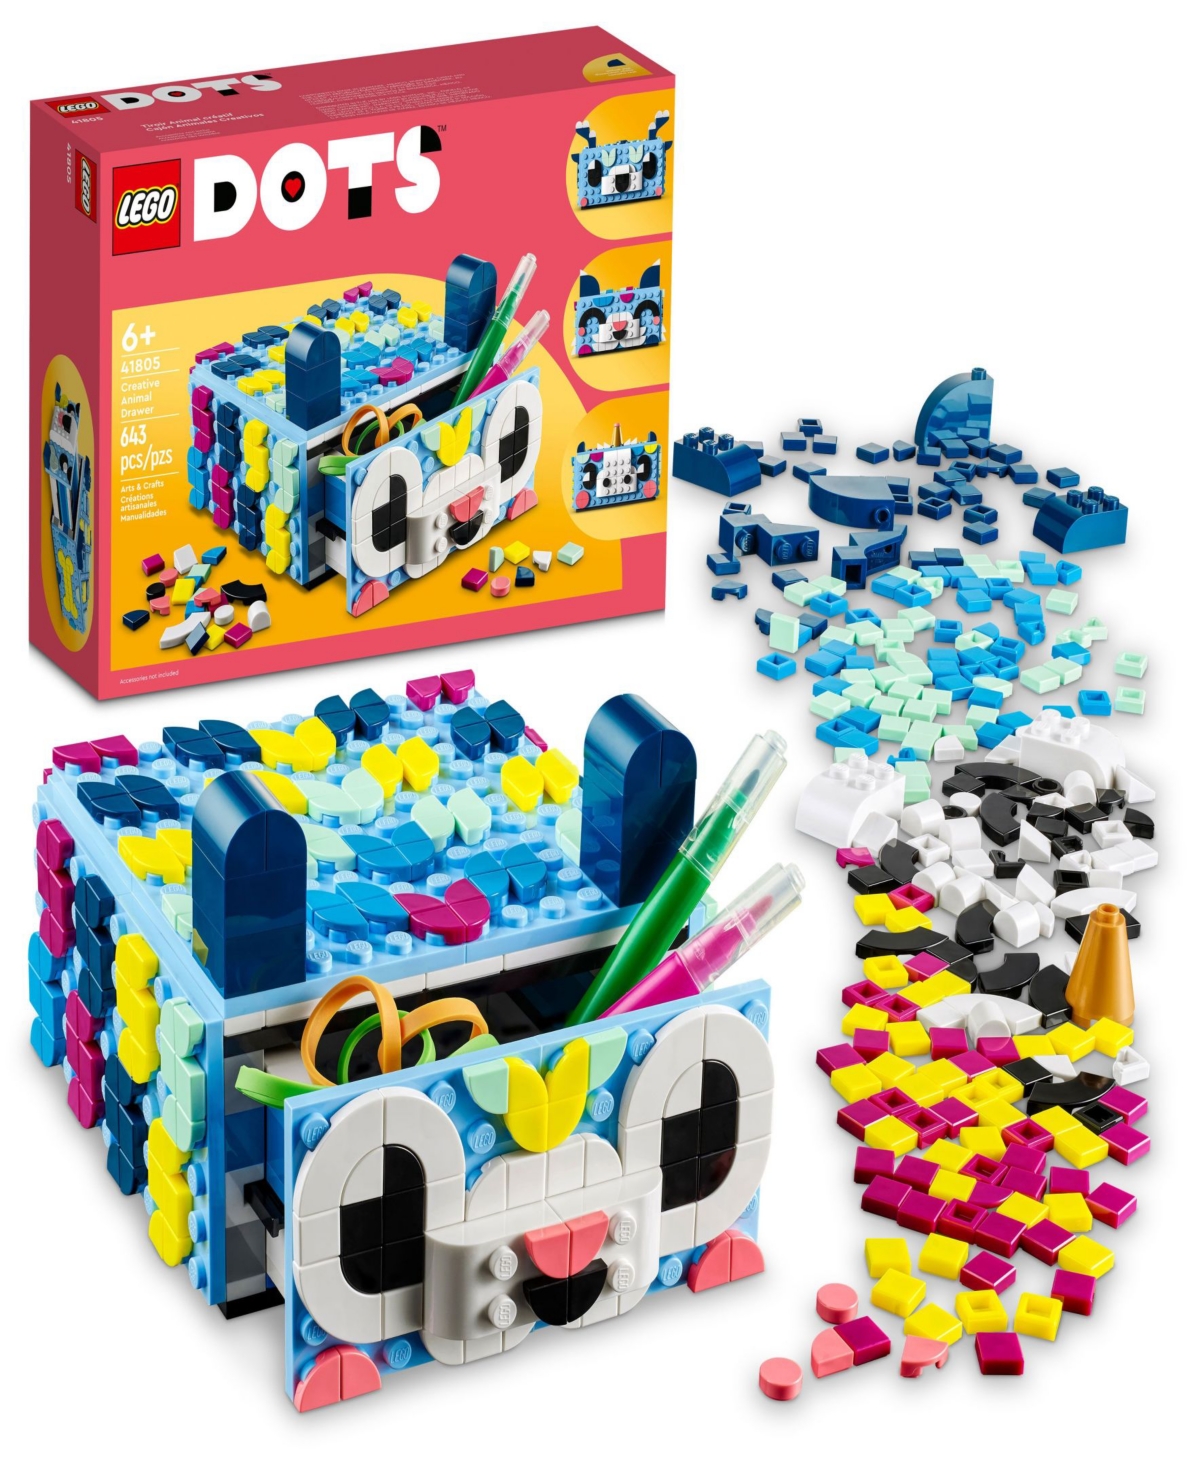 Lego Dots Creative Animal Drawer 41805 Building Set, 643 Pieces In Multicolor